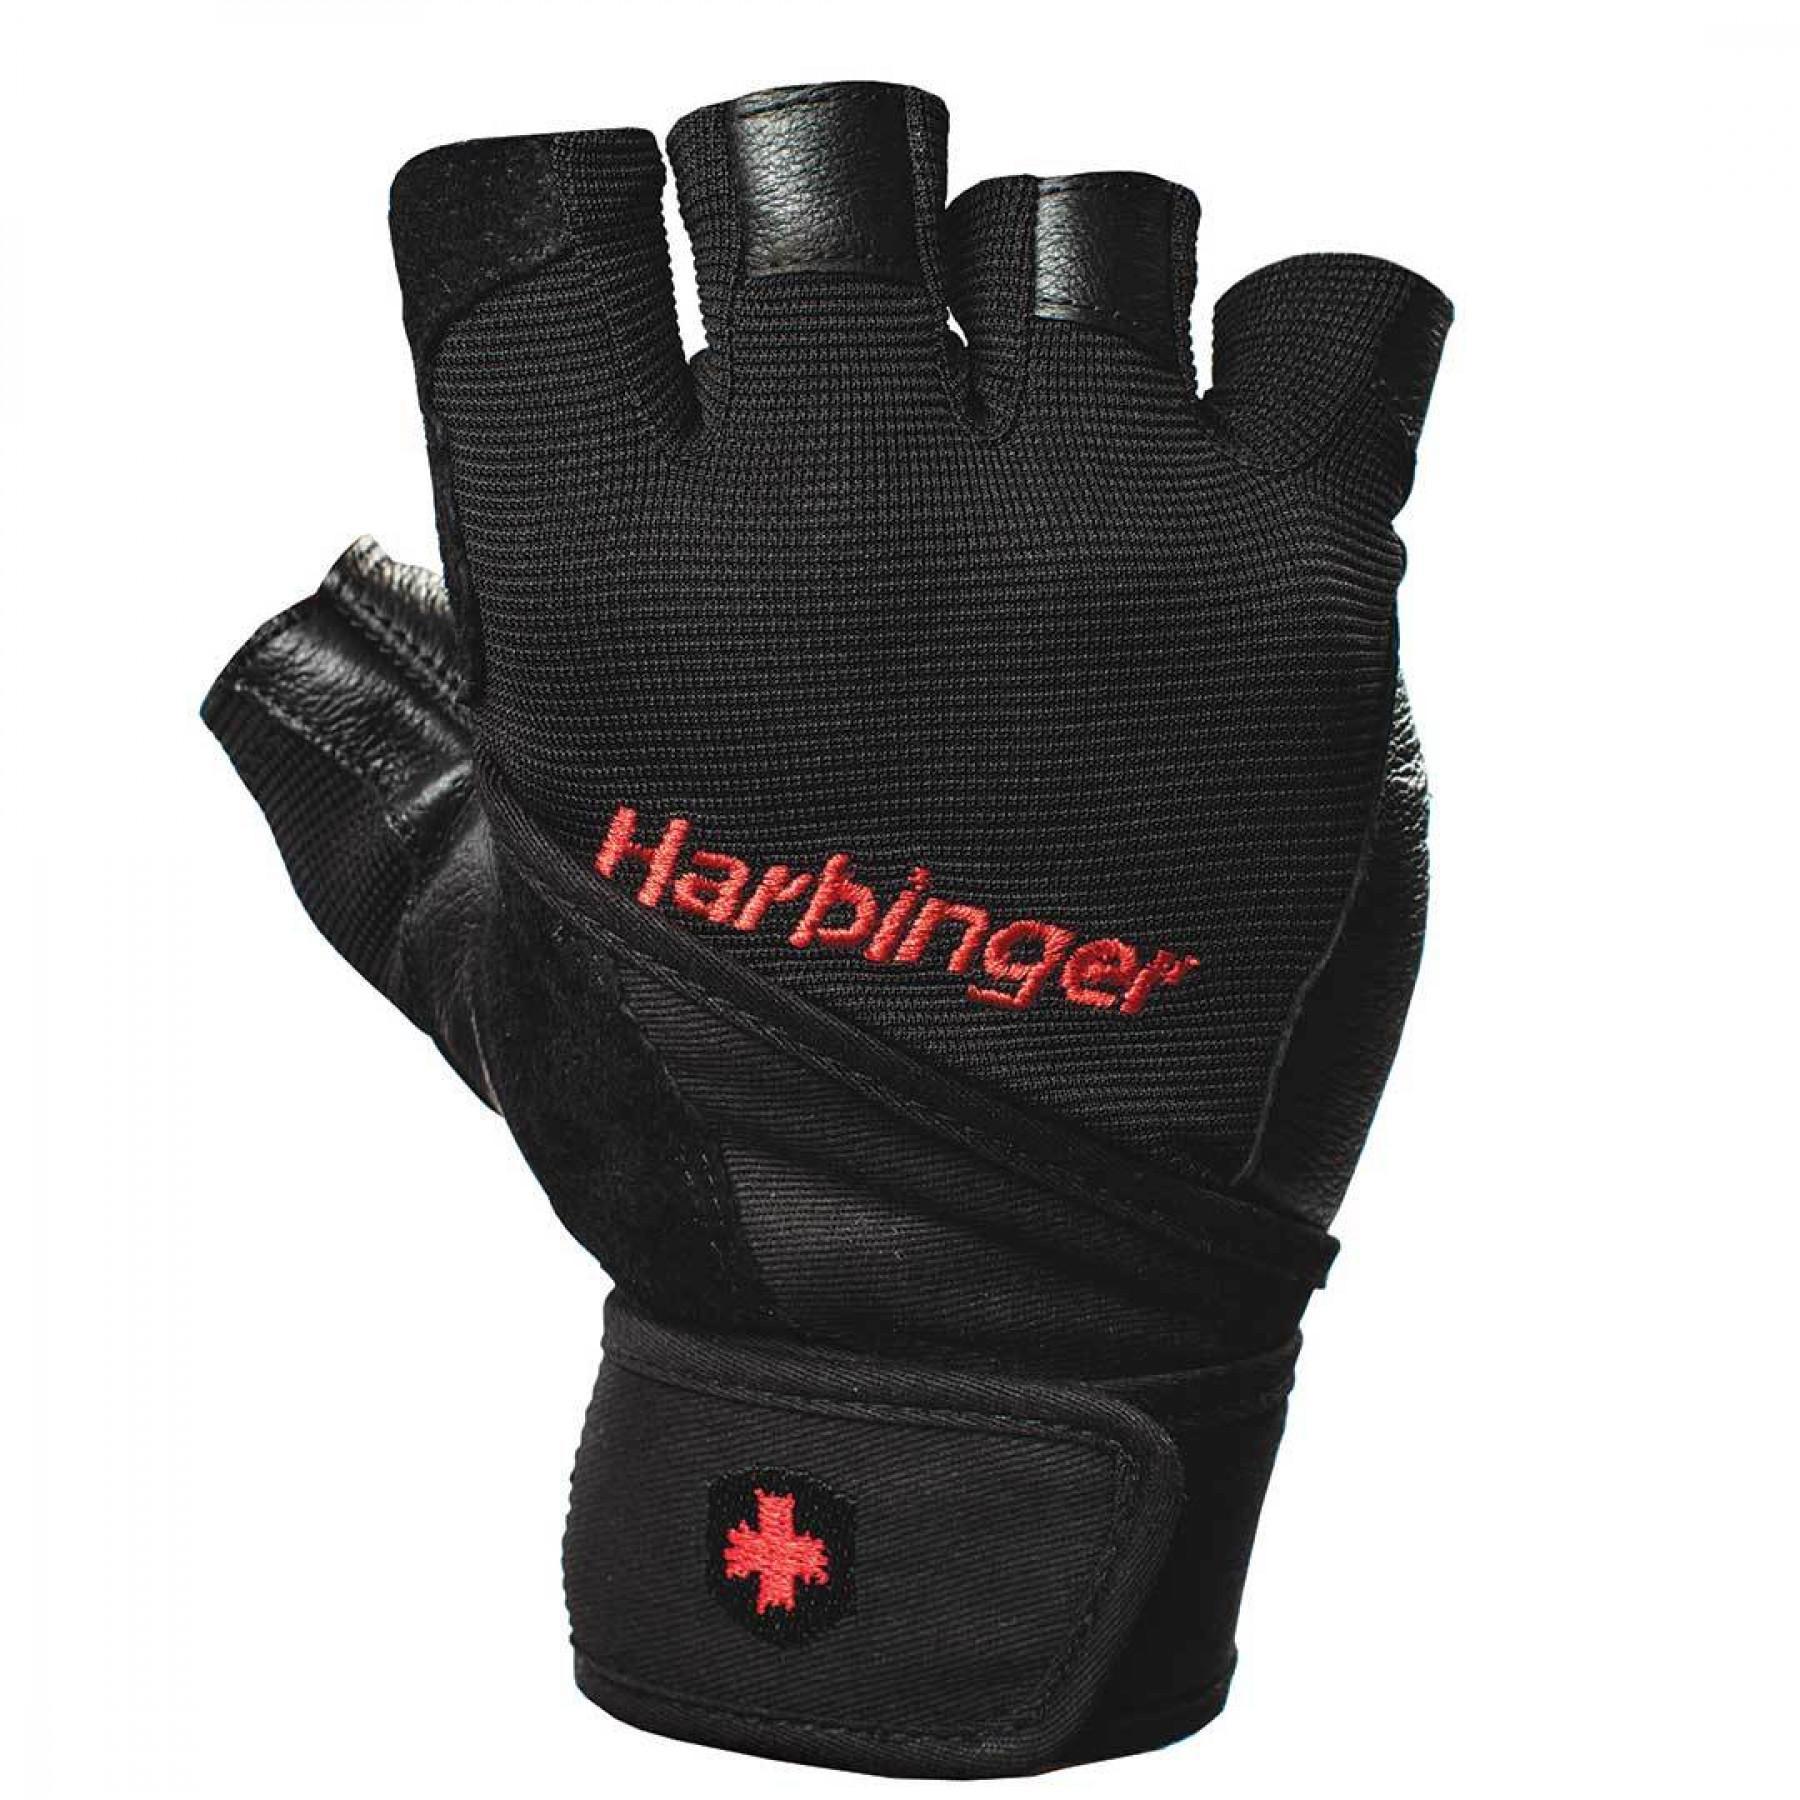 Glove Harbinger Pro WristWrap